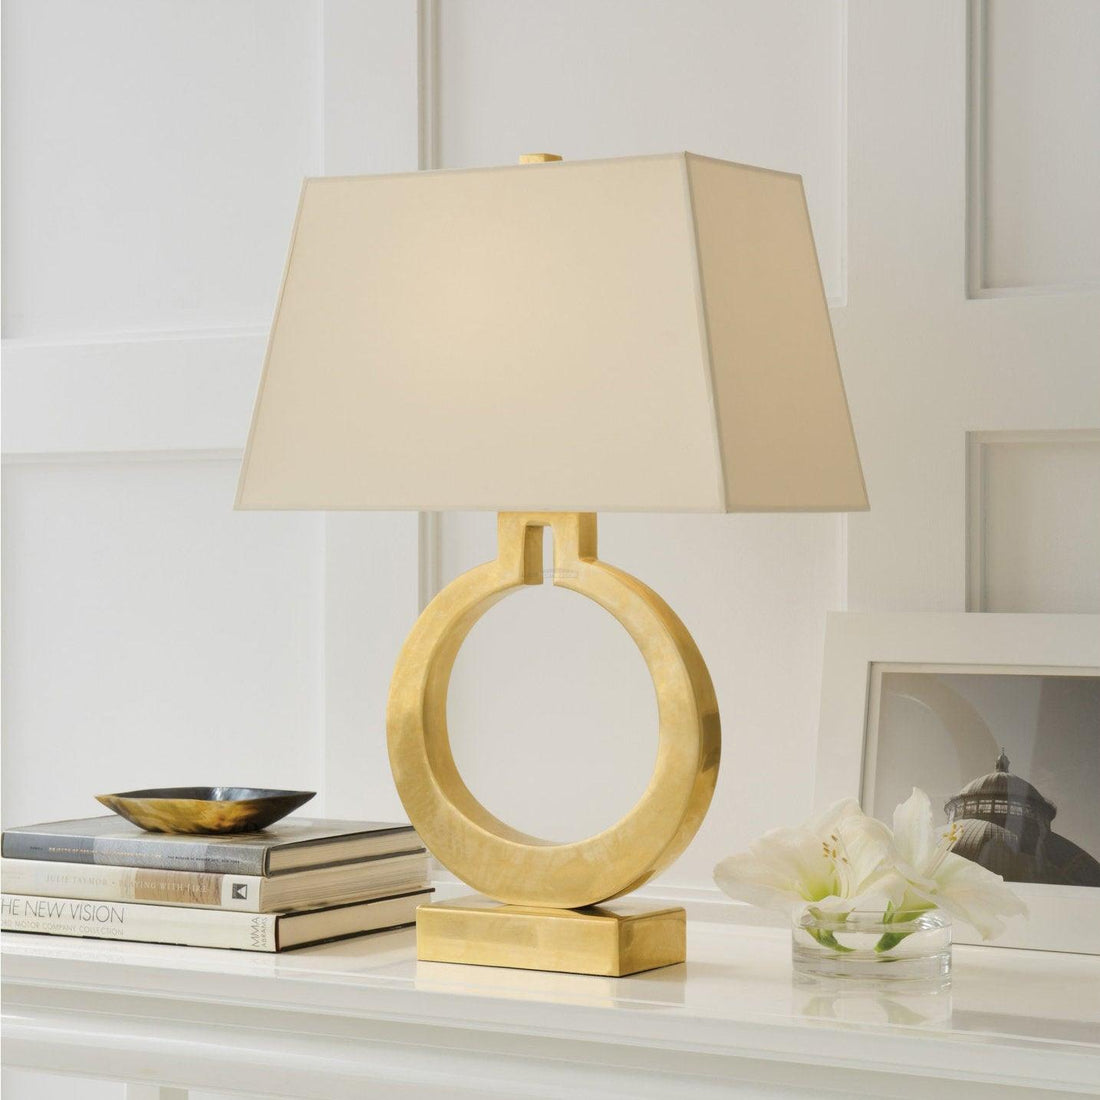 Ring Type Table Lamp